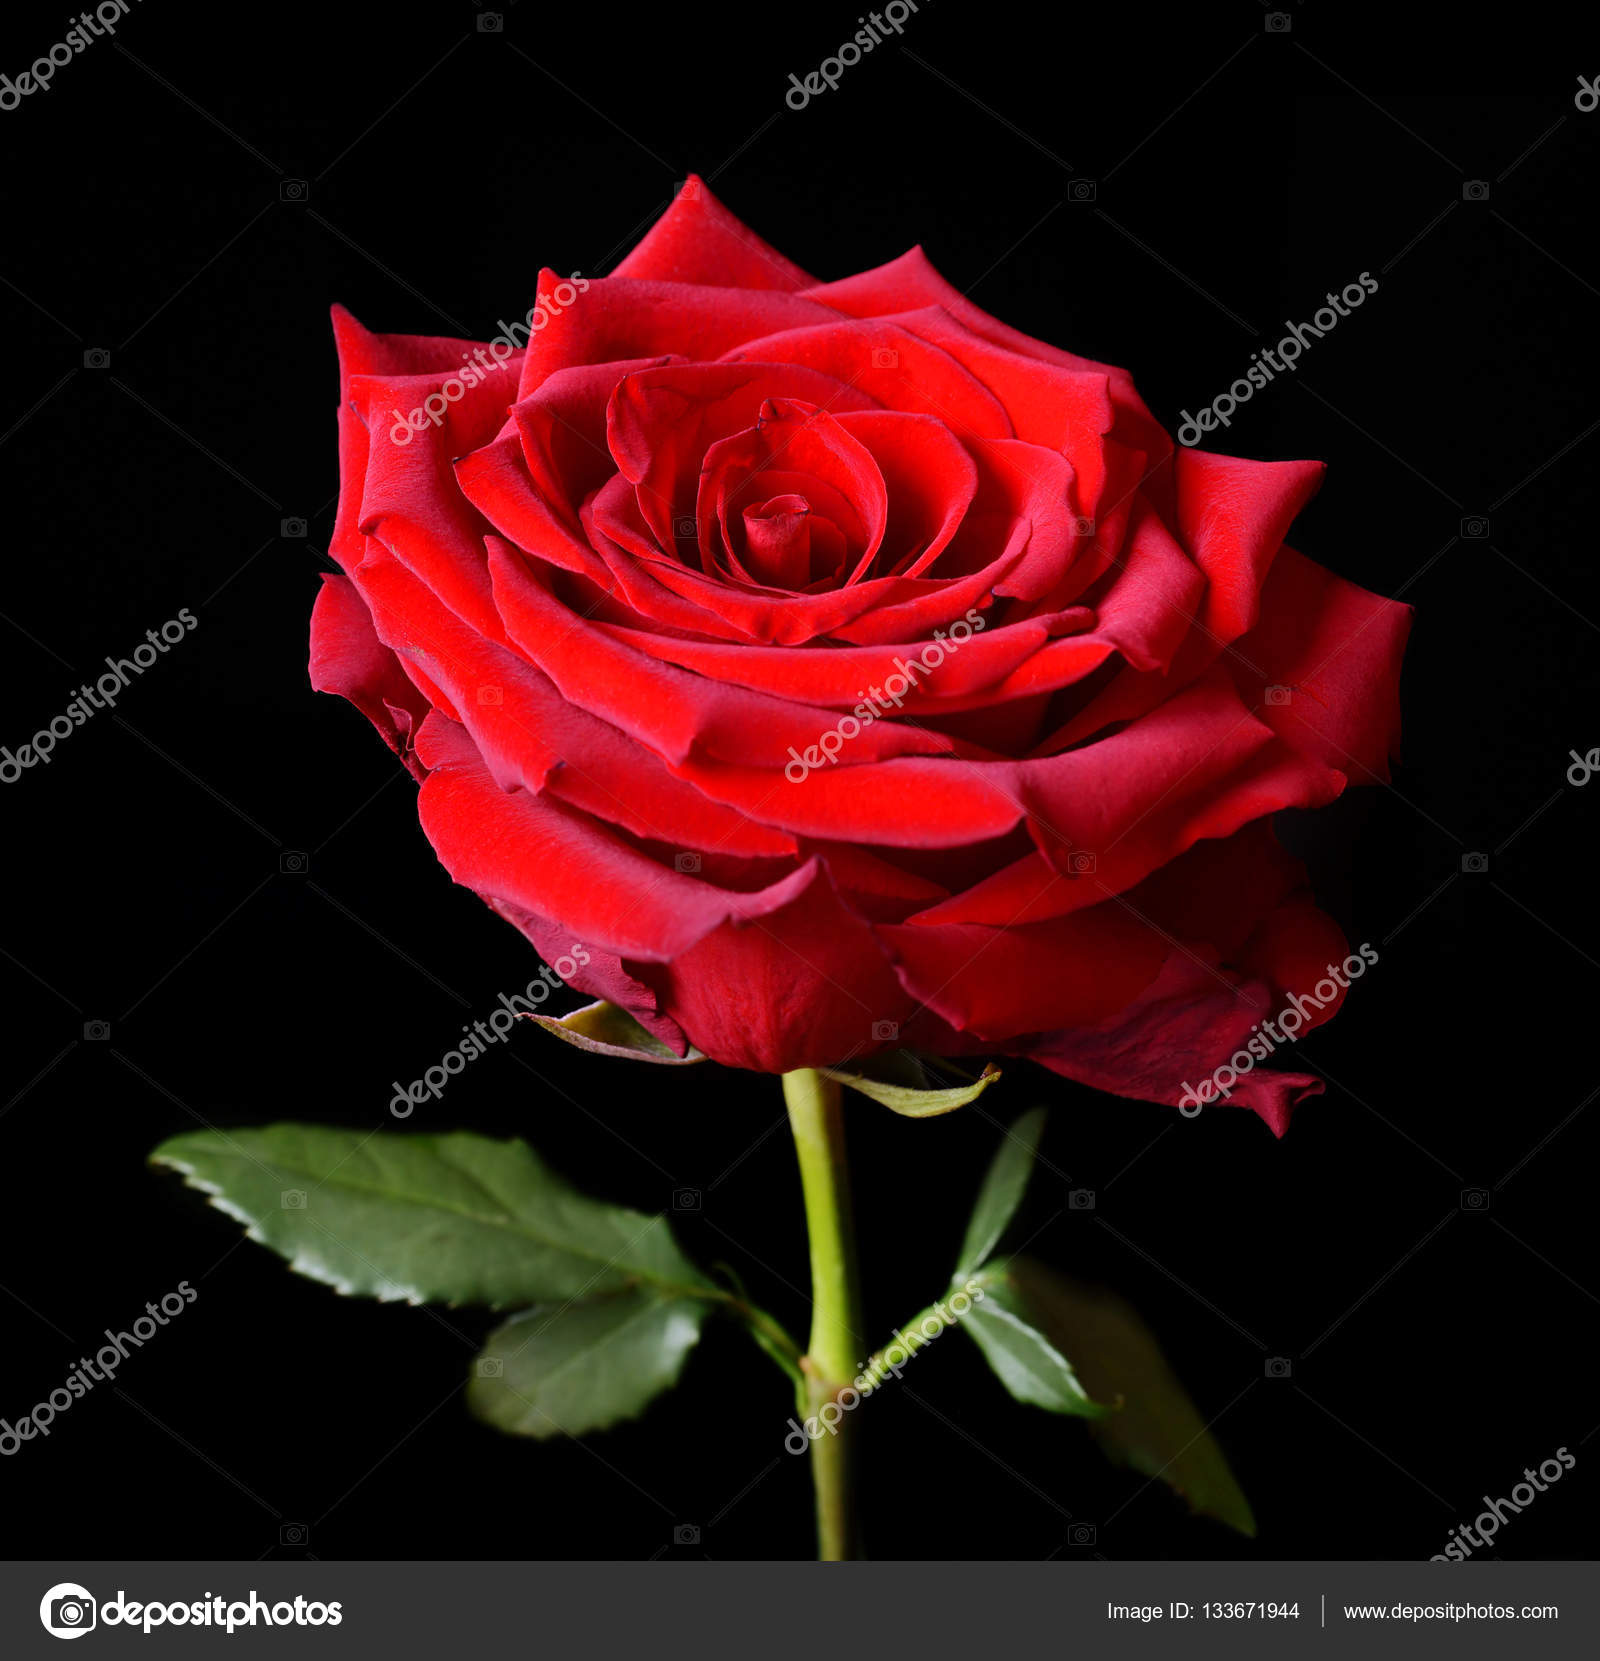 Red rose close up. — Stock Photo © vencav #133671944